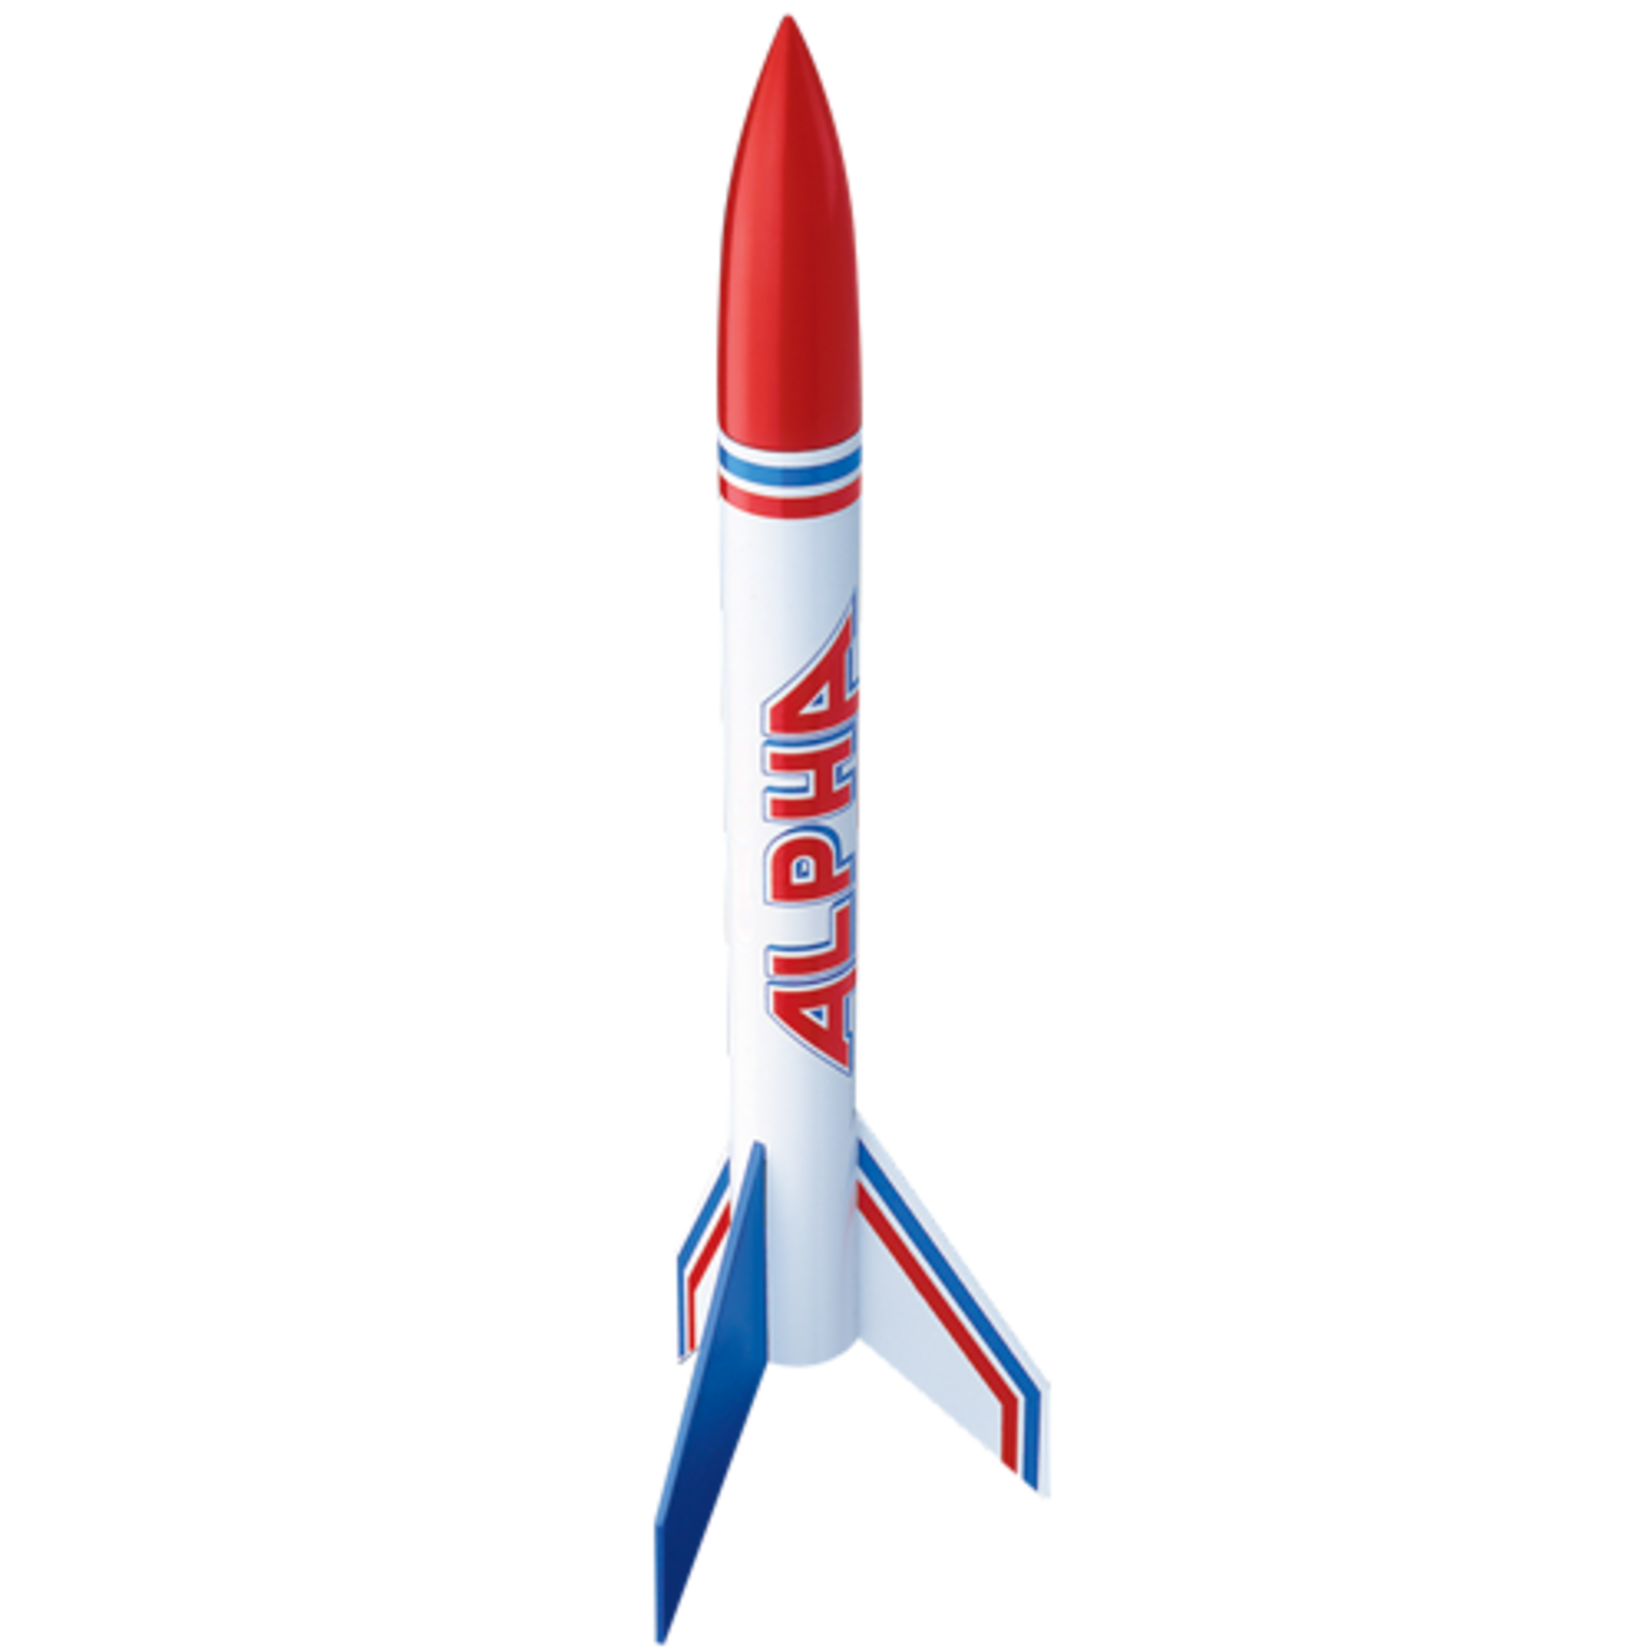 EST Alpha Rocket Kit Skill Level 1